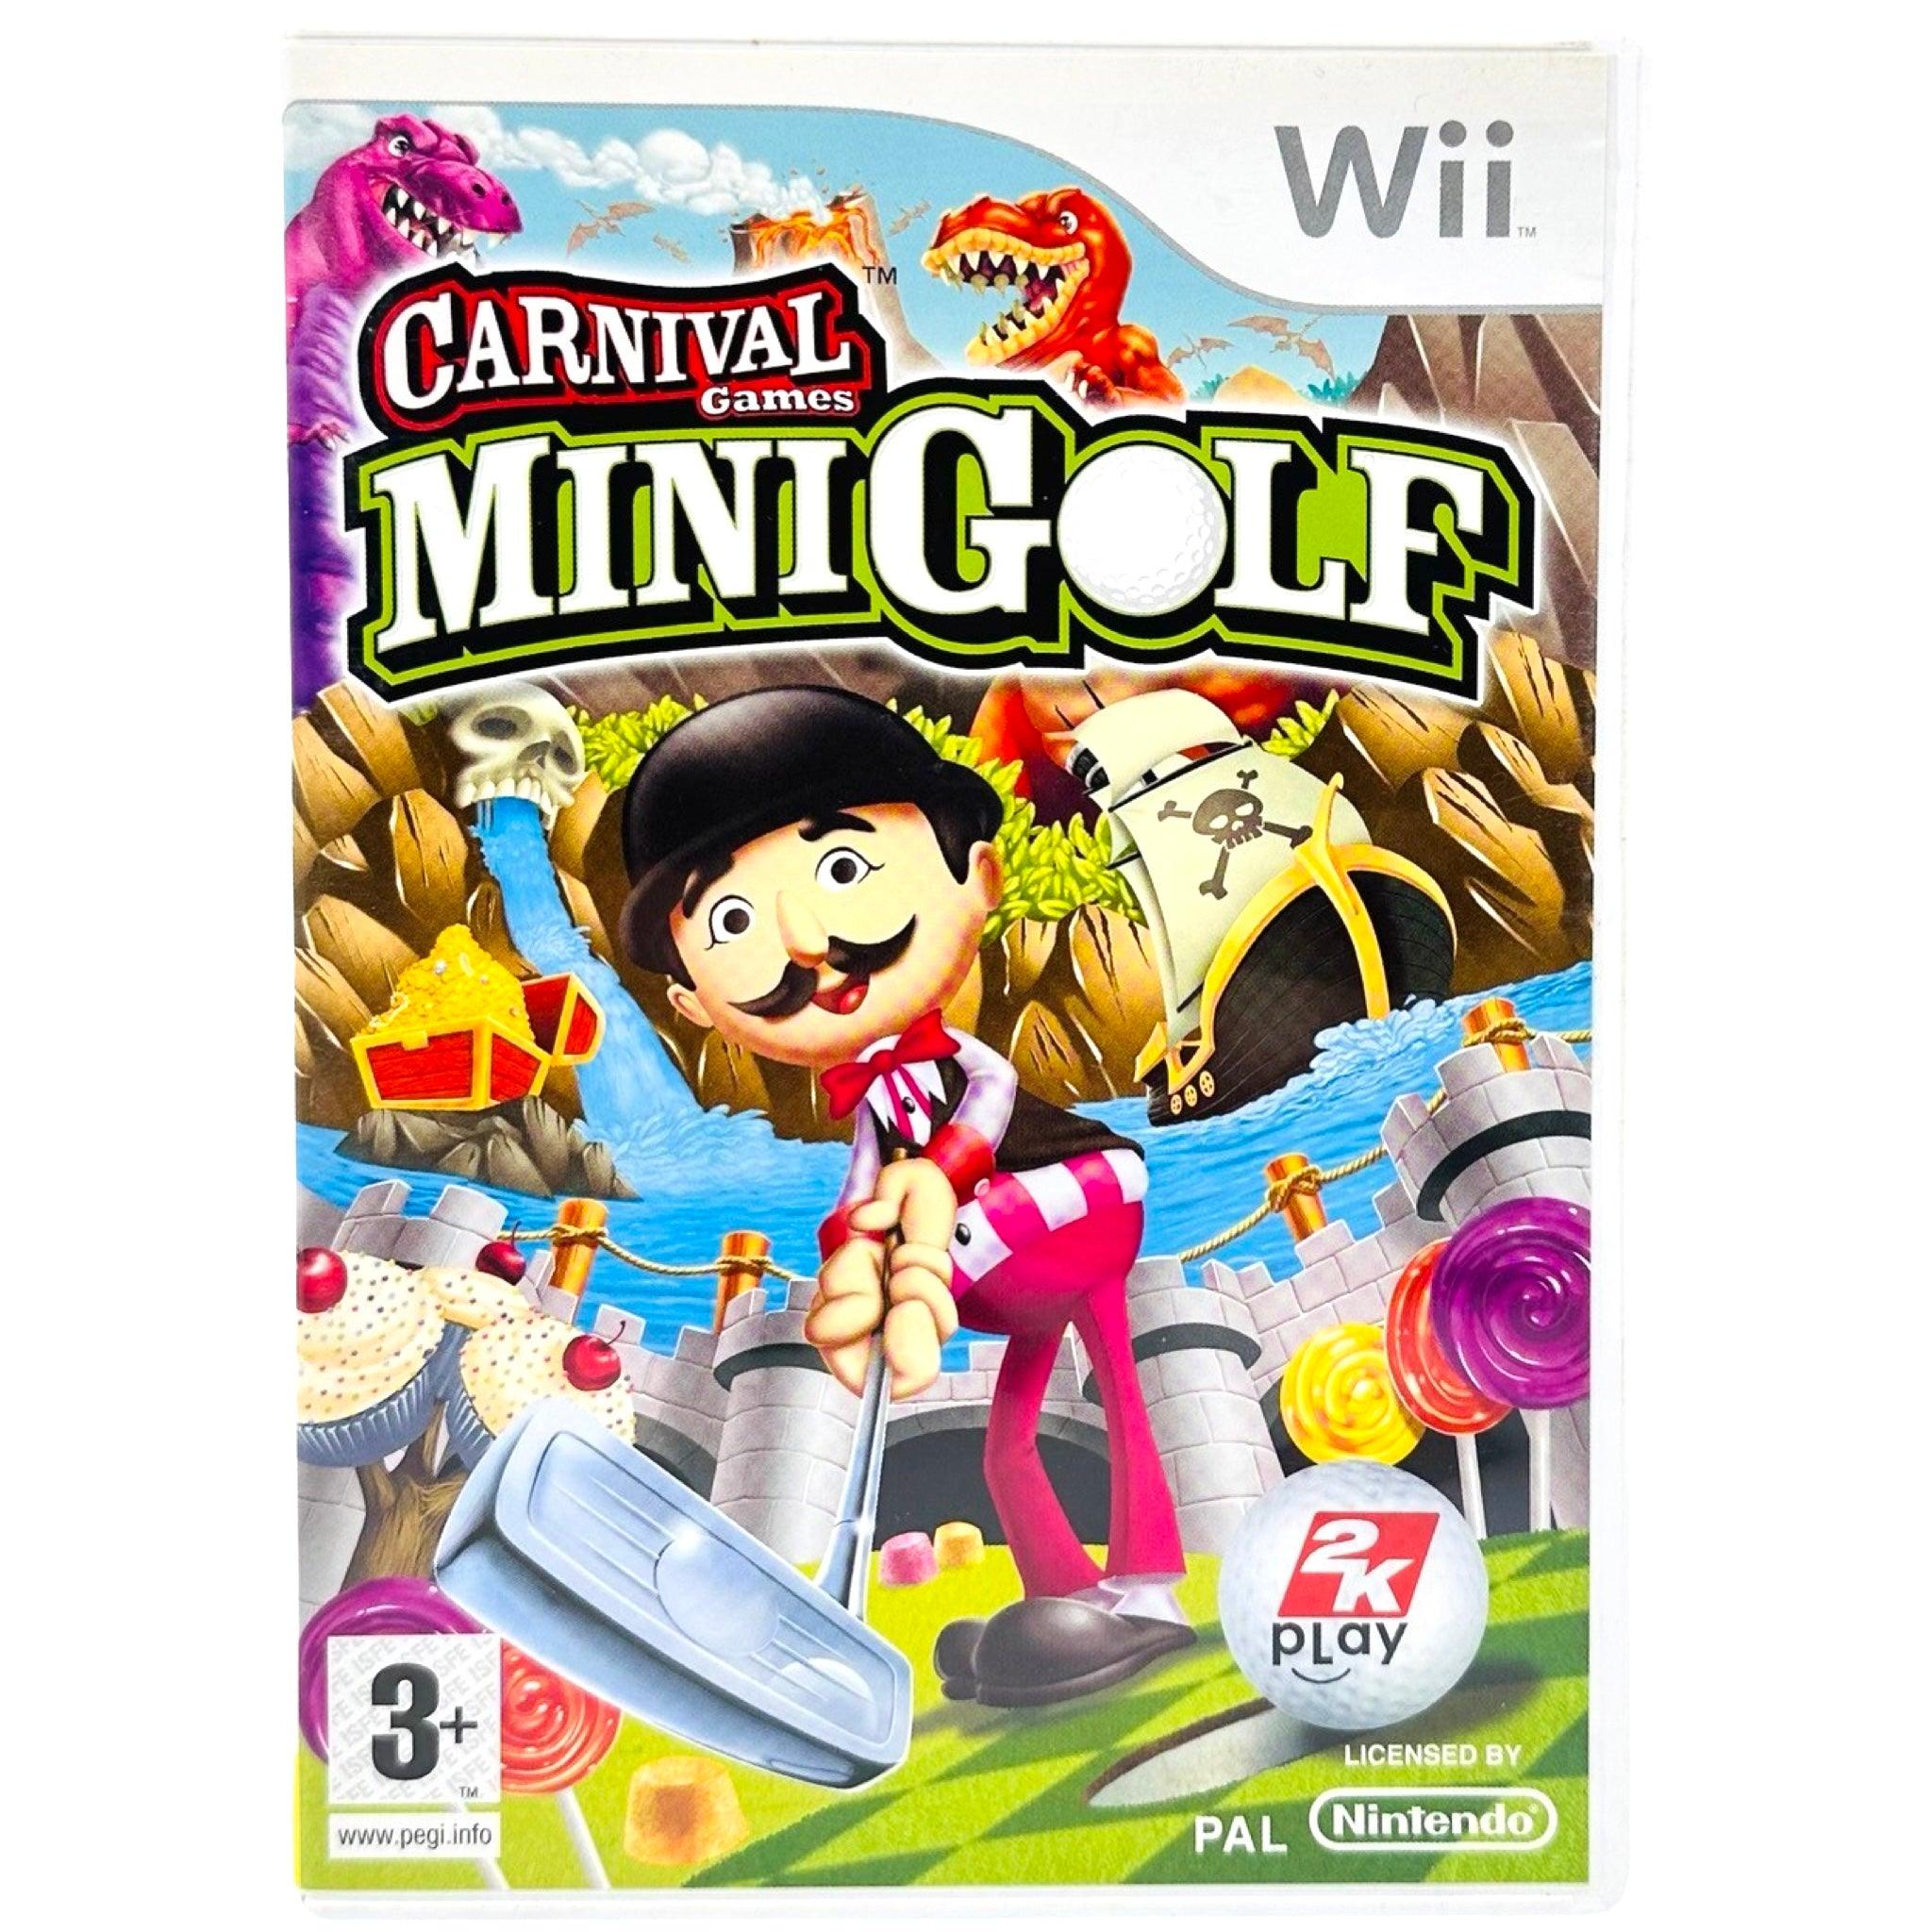 Wii: Carnival Games: Mini Golf - RetroGaming.no